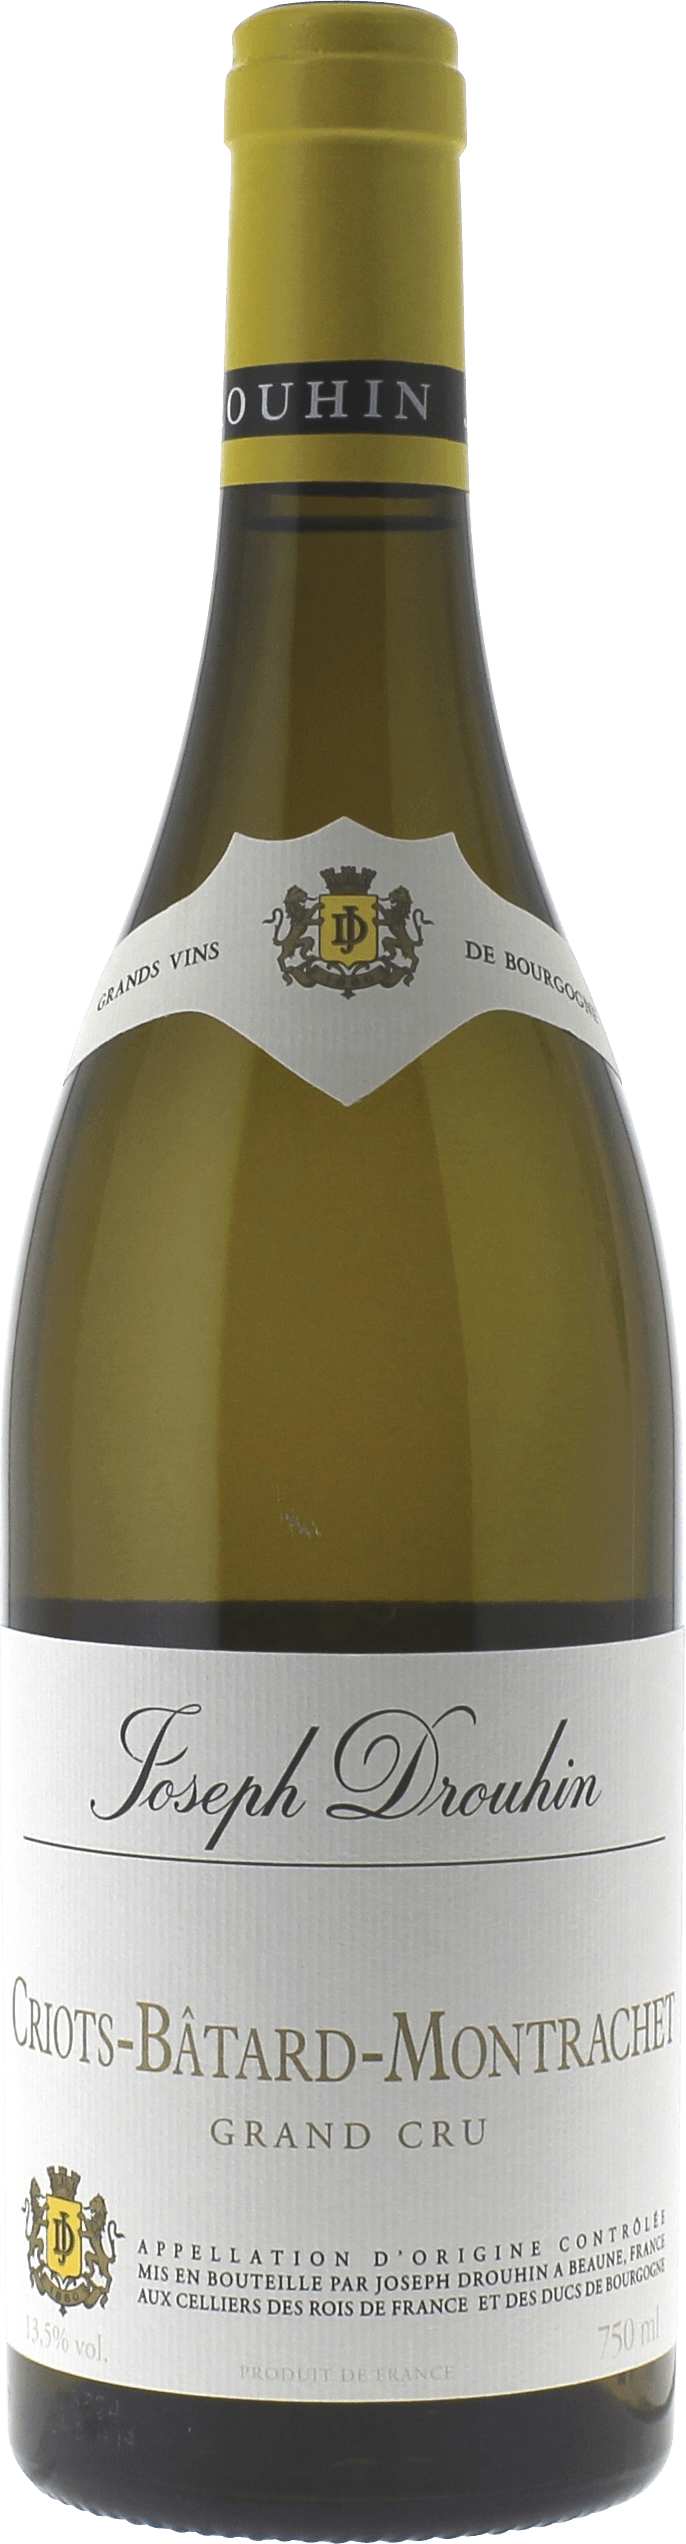 Criots batard montrachet grand cru 2015 Domaine Joseph DROUHIN, Bourgogne blanc